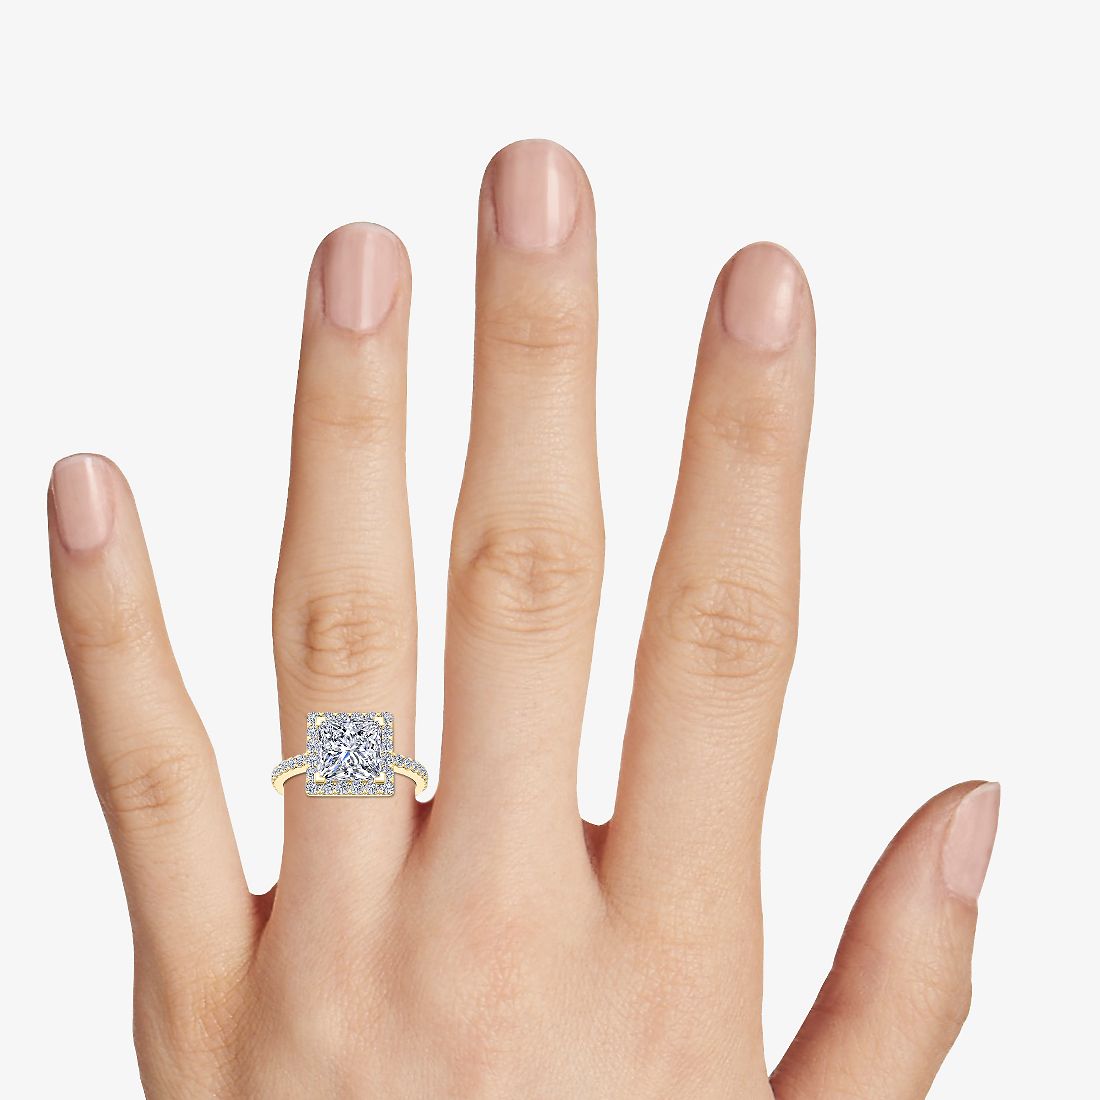 Details about   2.77 Carat Brilliant Princess Cut Diamond Halo Engagement Ring 14k Gold Plated 